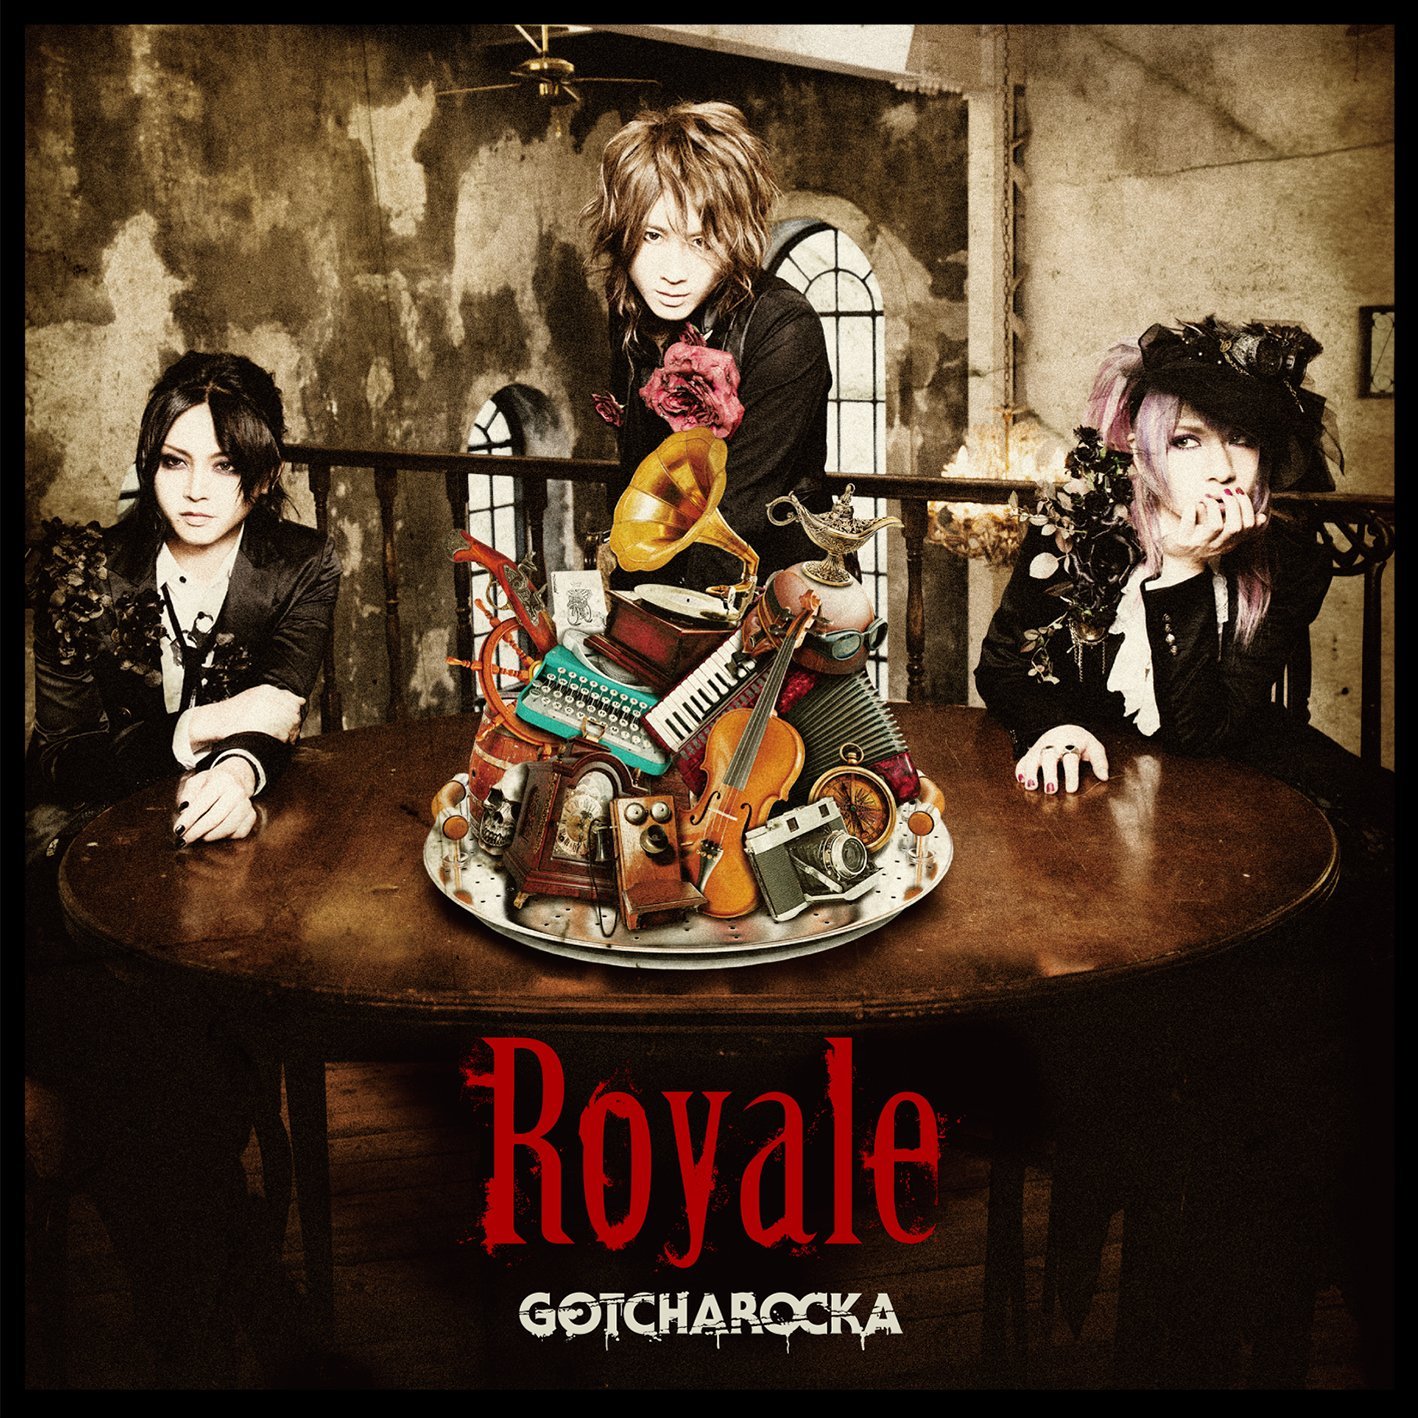 GOTCHAROCKA/Royale